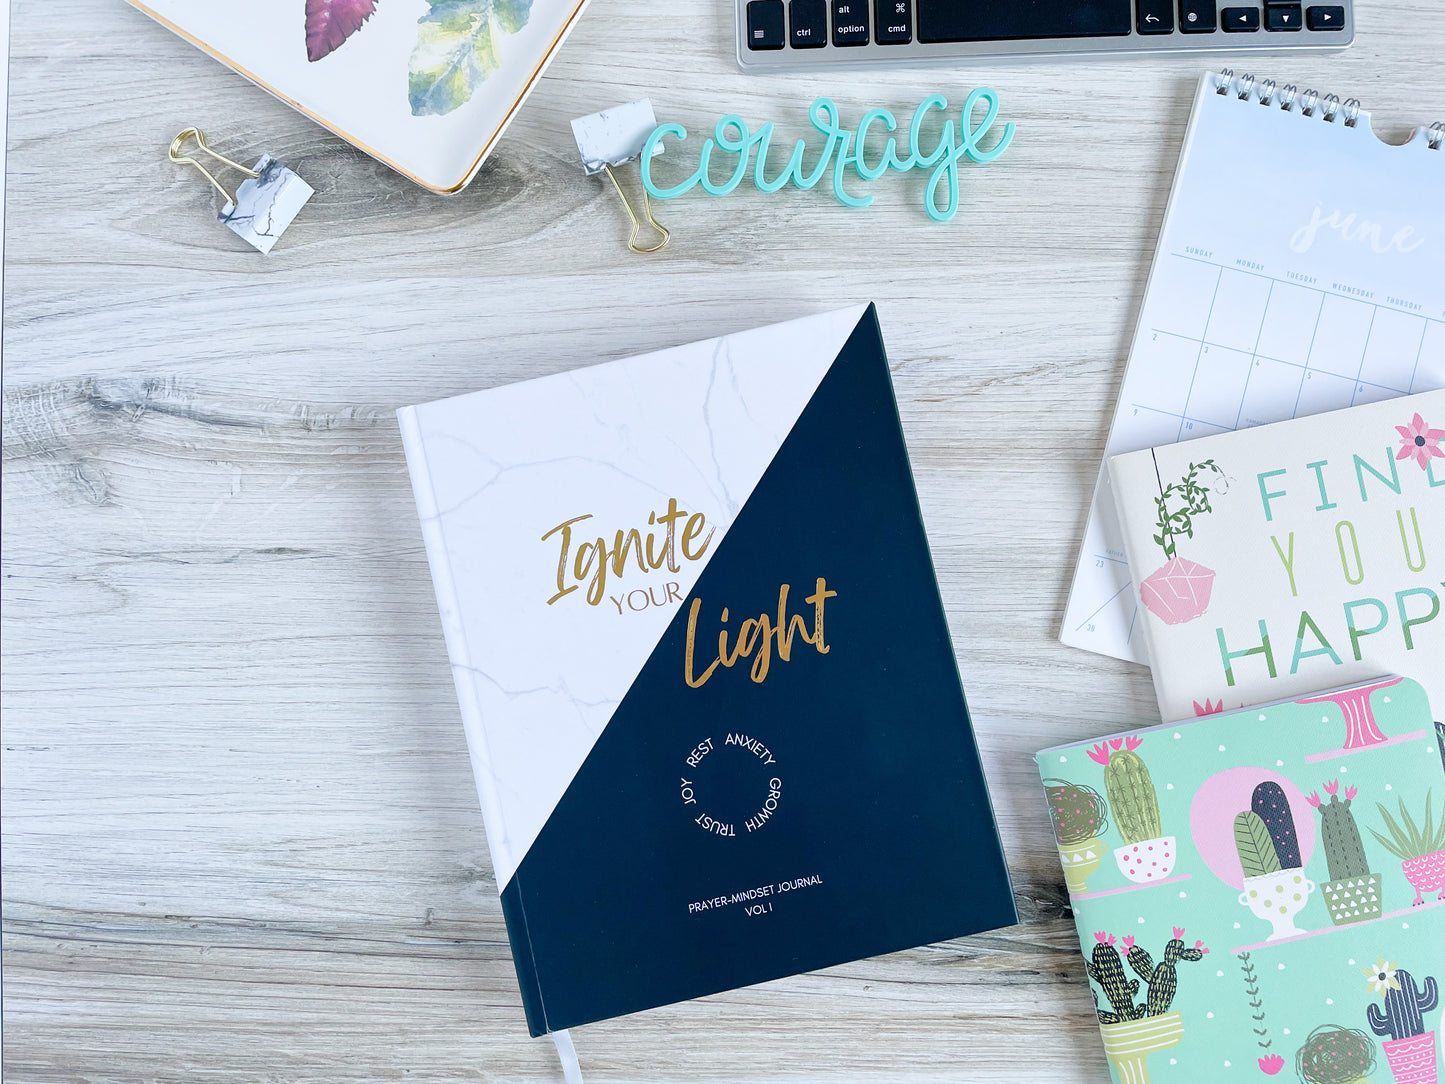 Ignite Your Light Prayer Journal